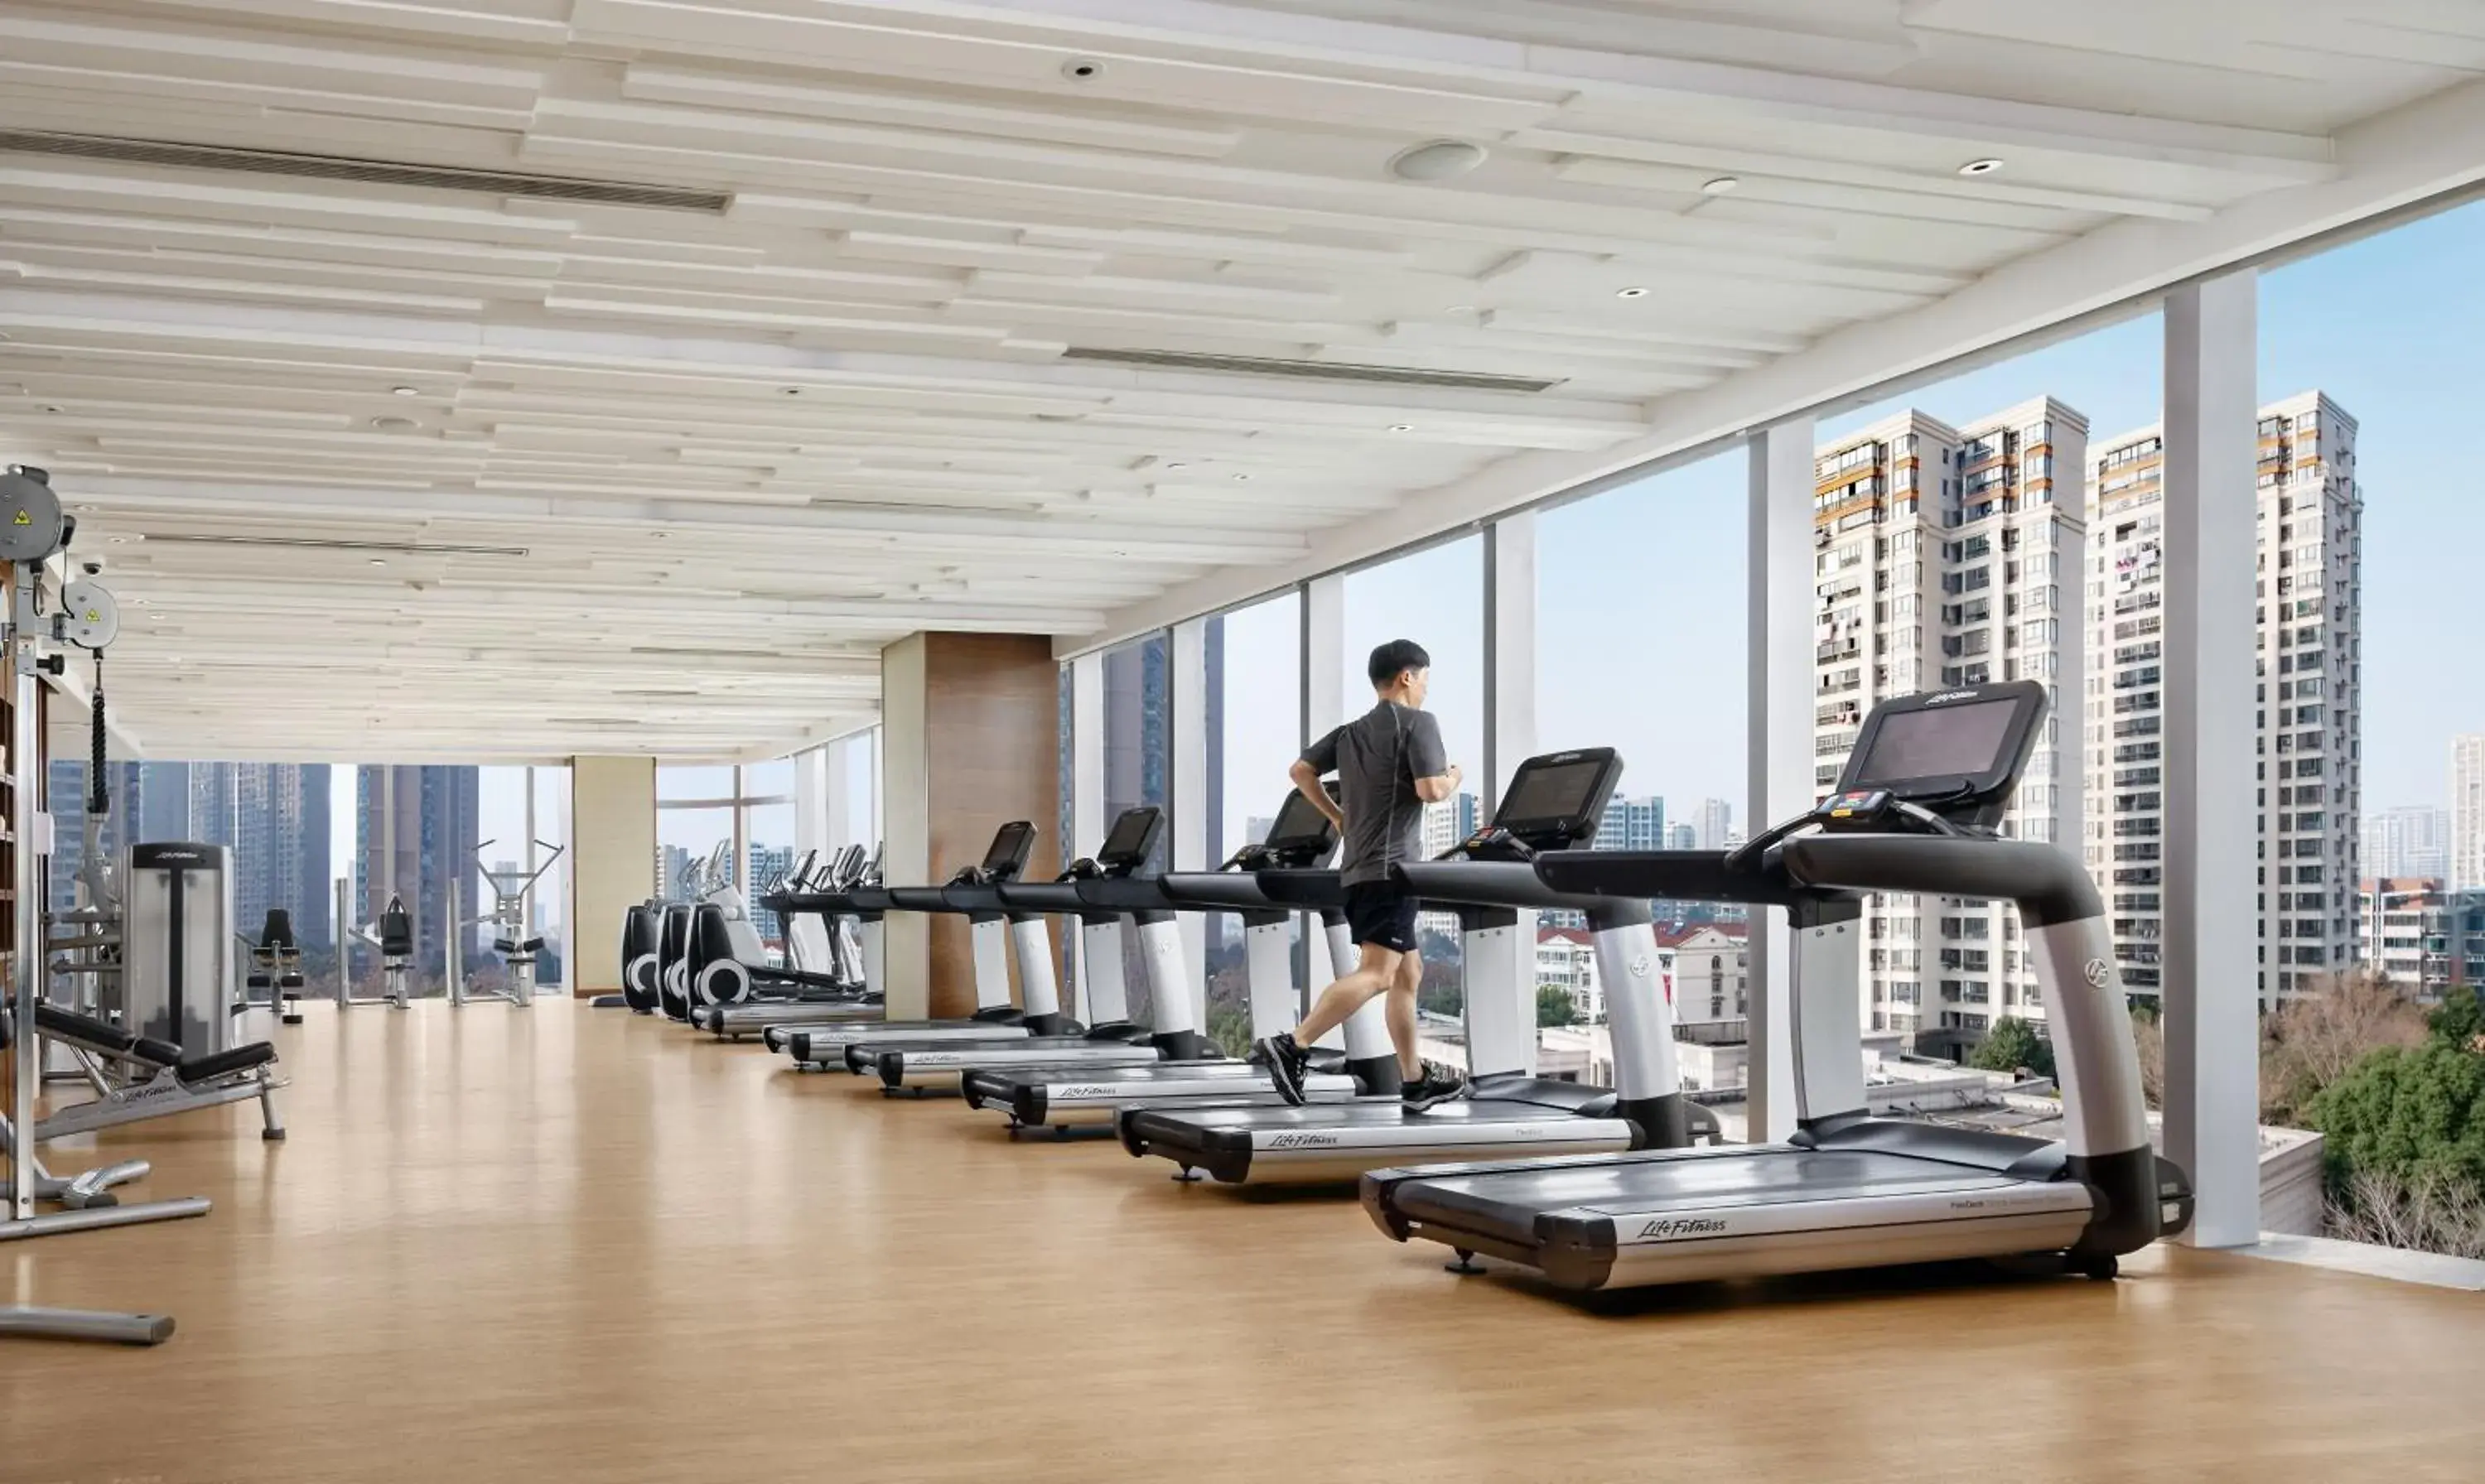 Fitness centre/facilities, Fitness Center/Facilities in Shangri-La Hefei